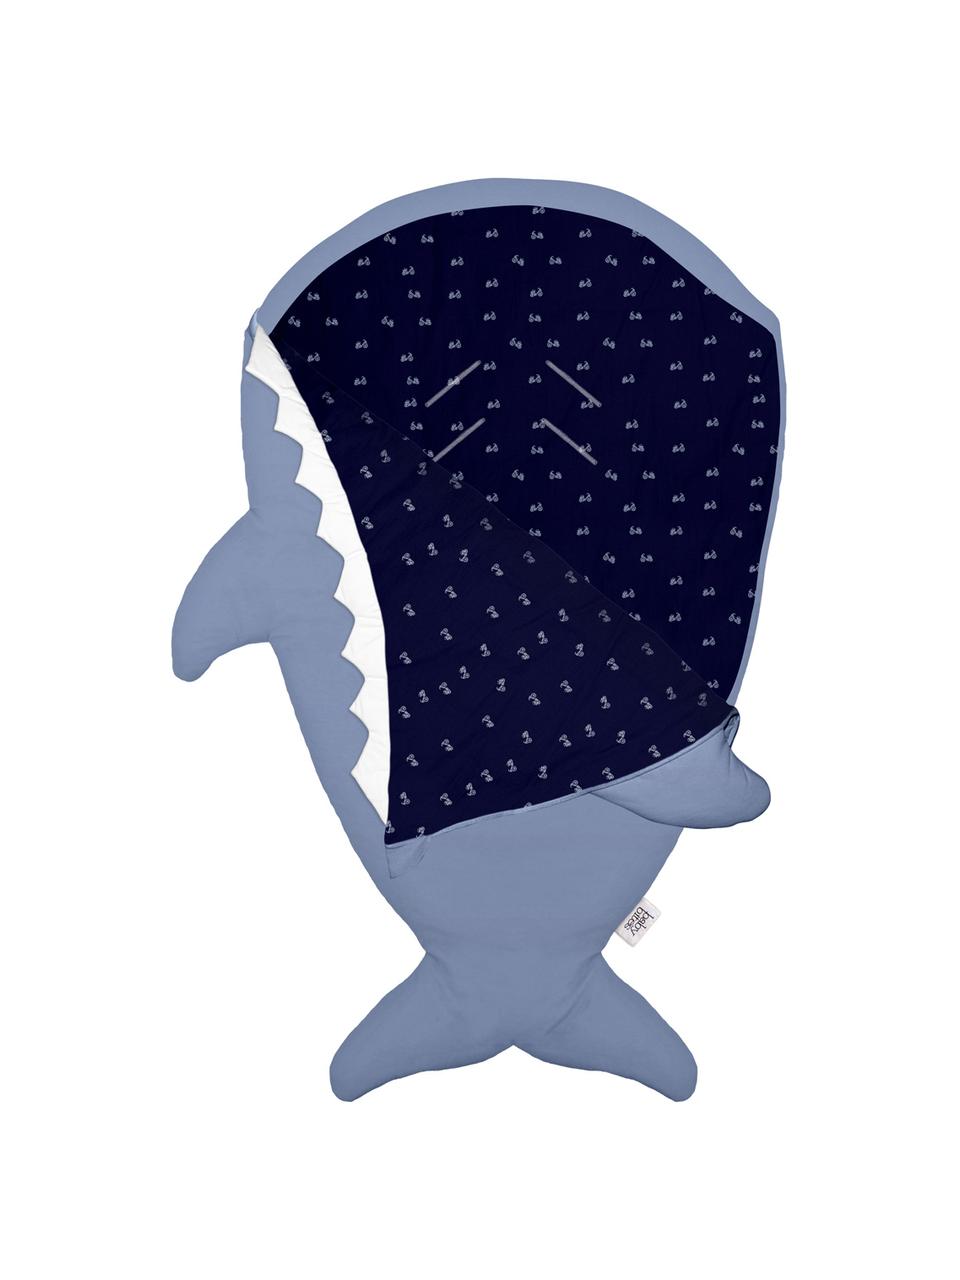 Kinderslaapzak Mini Shark, Bekleding: katoen, Oeko-Tex gecertif, Blauwgrijs, 73 x 98 cm